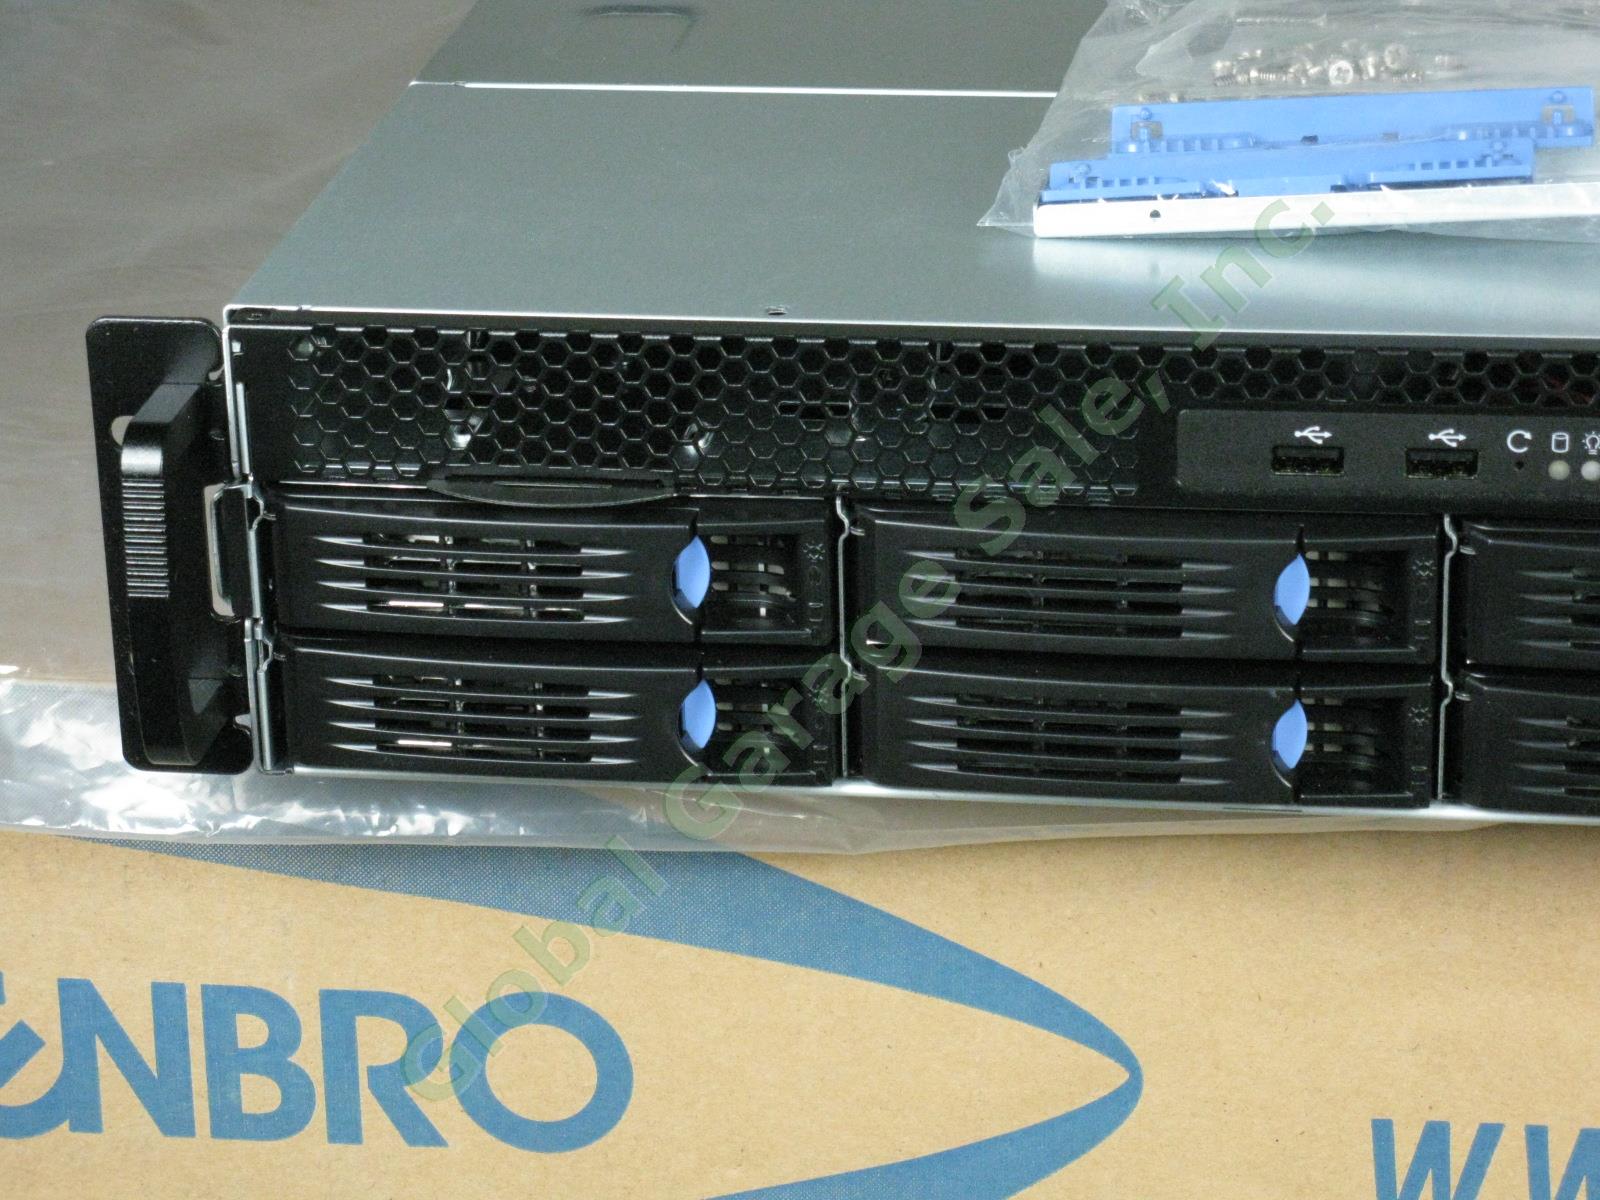 NEW Chenbro RM23608 2U 8-Bay Hot Swap Rack Mount Server Case Chassis SSI EEB 1